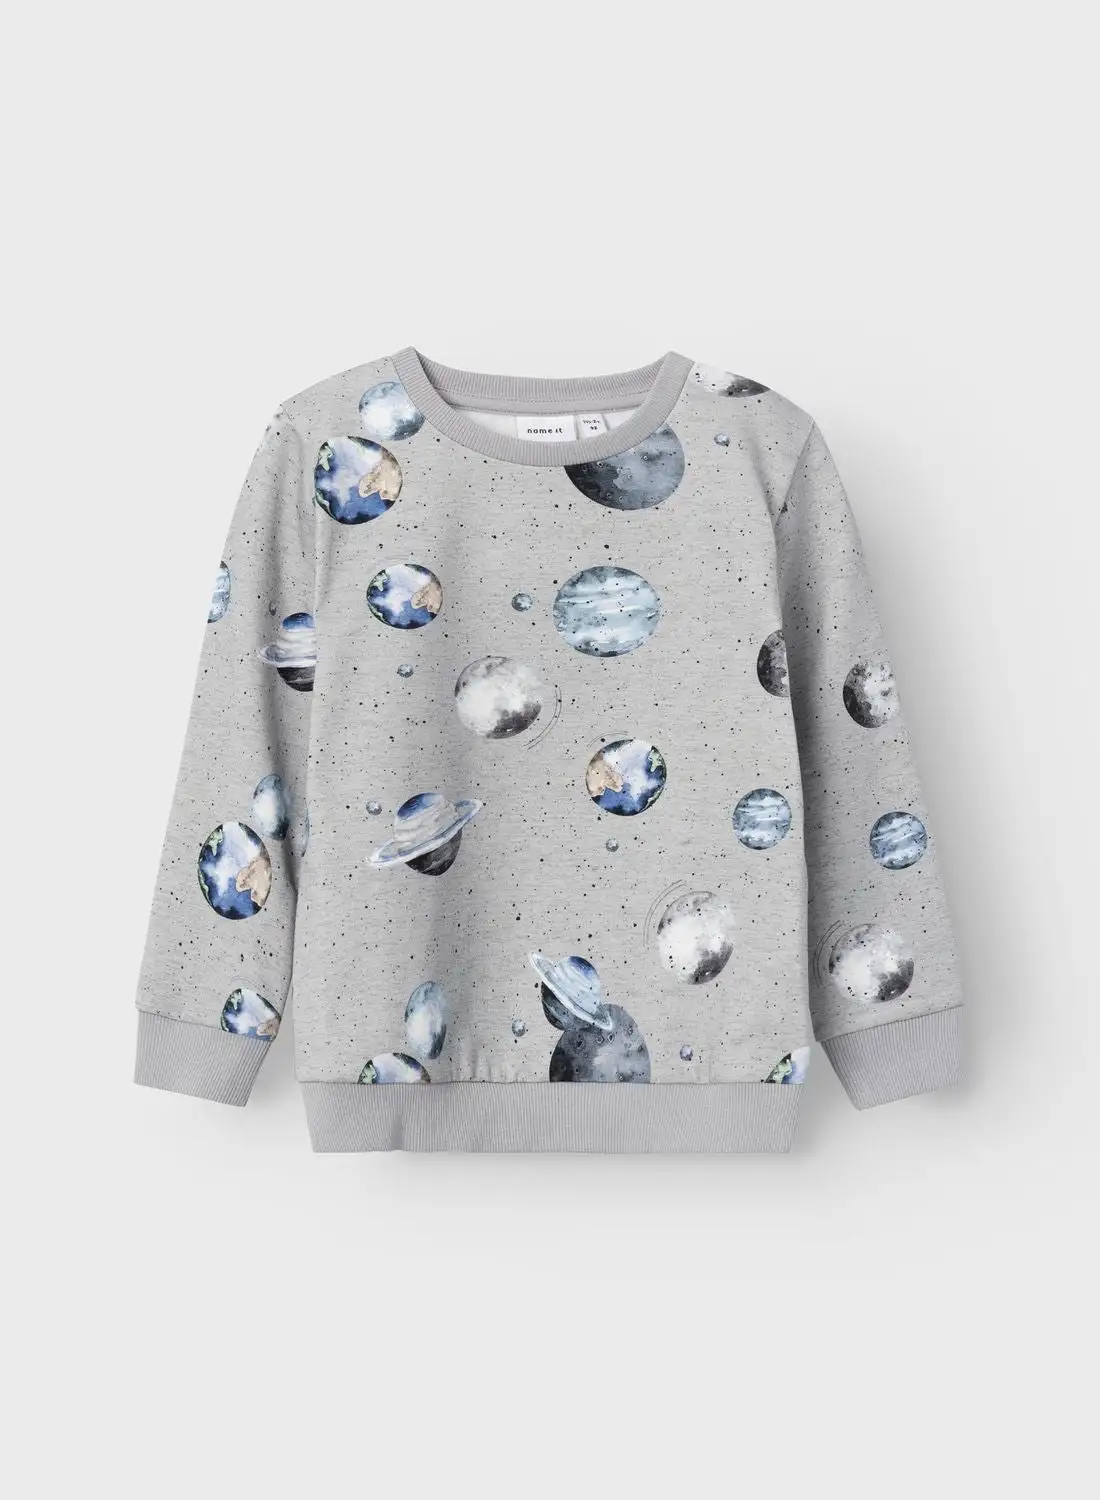 NAME IT Kids Planet Print Sweatshirt